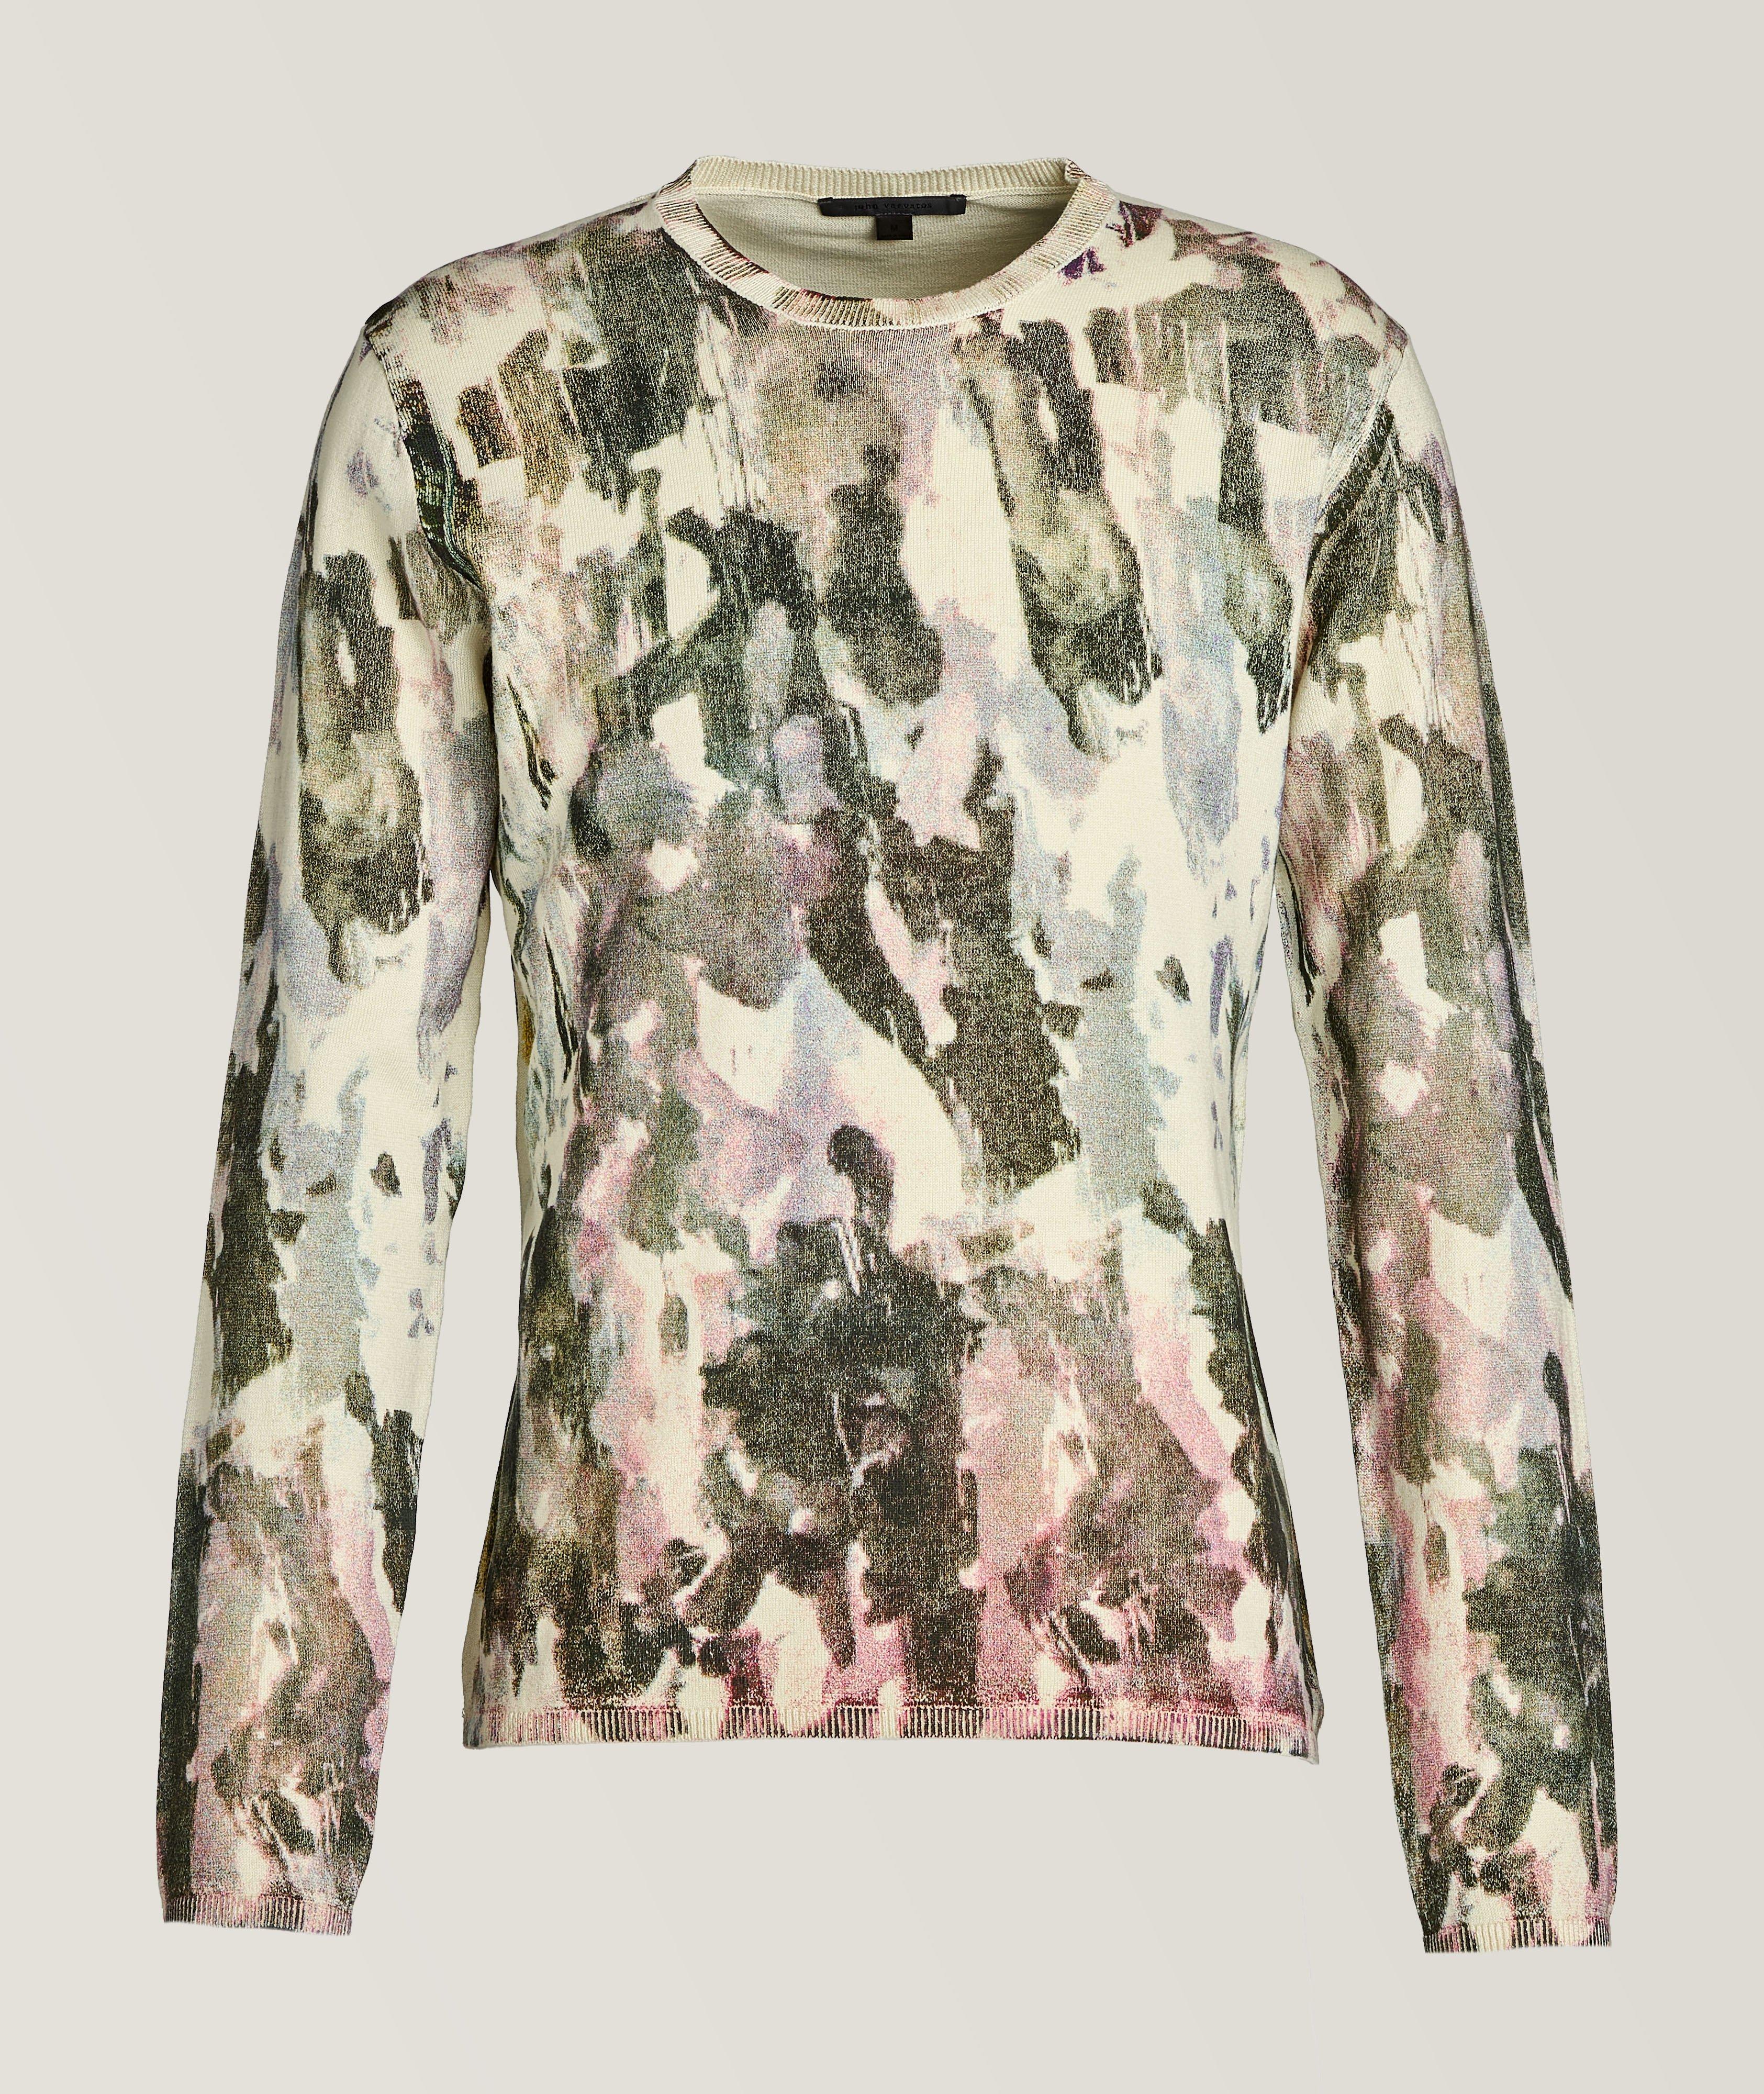 Abstract Camo Cotton Shirt image 0